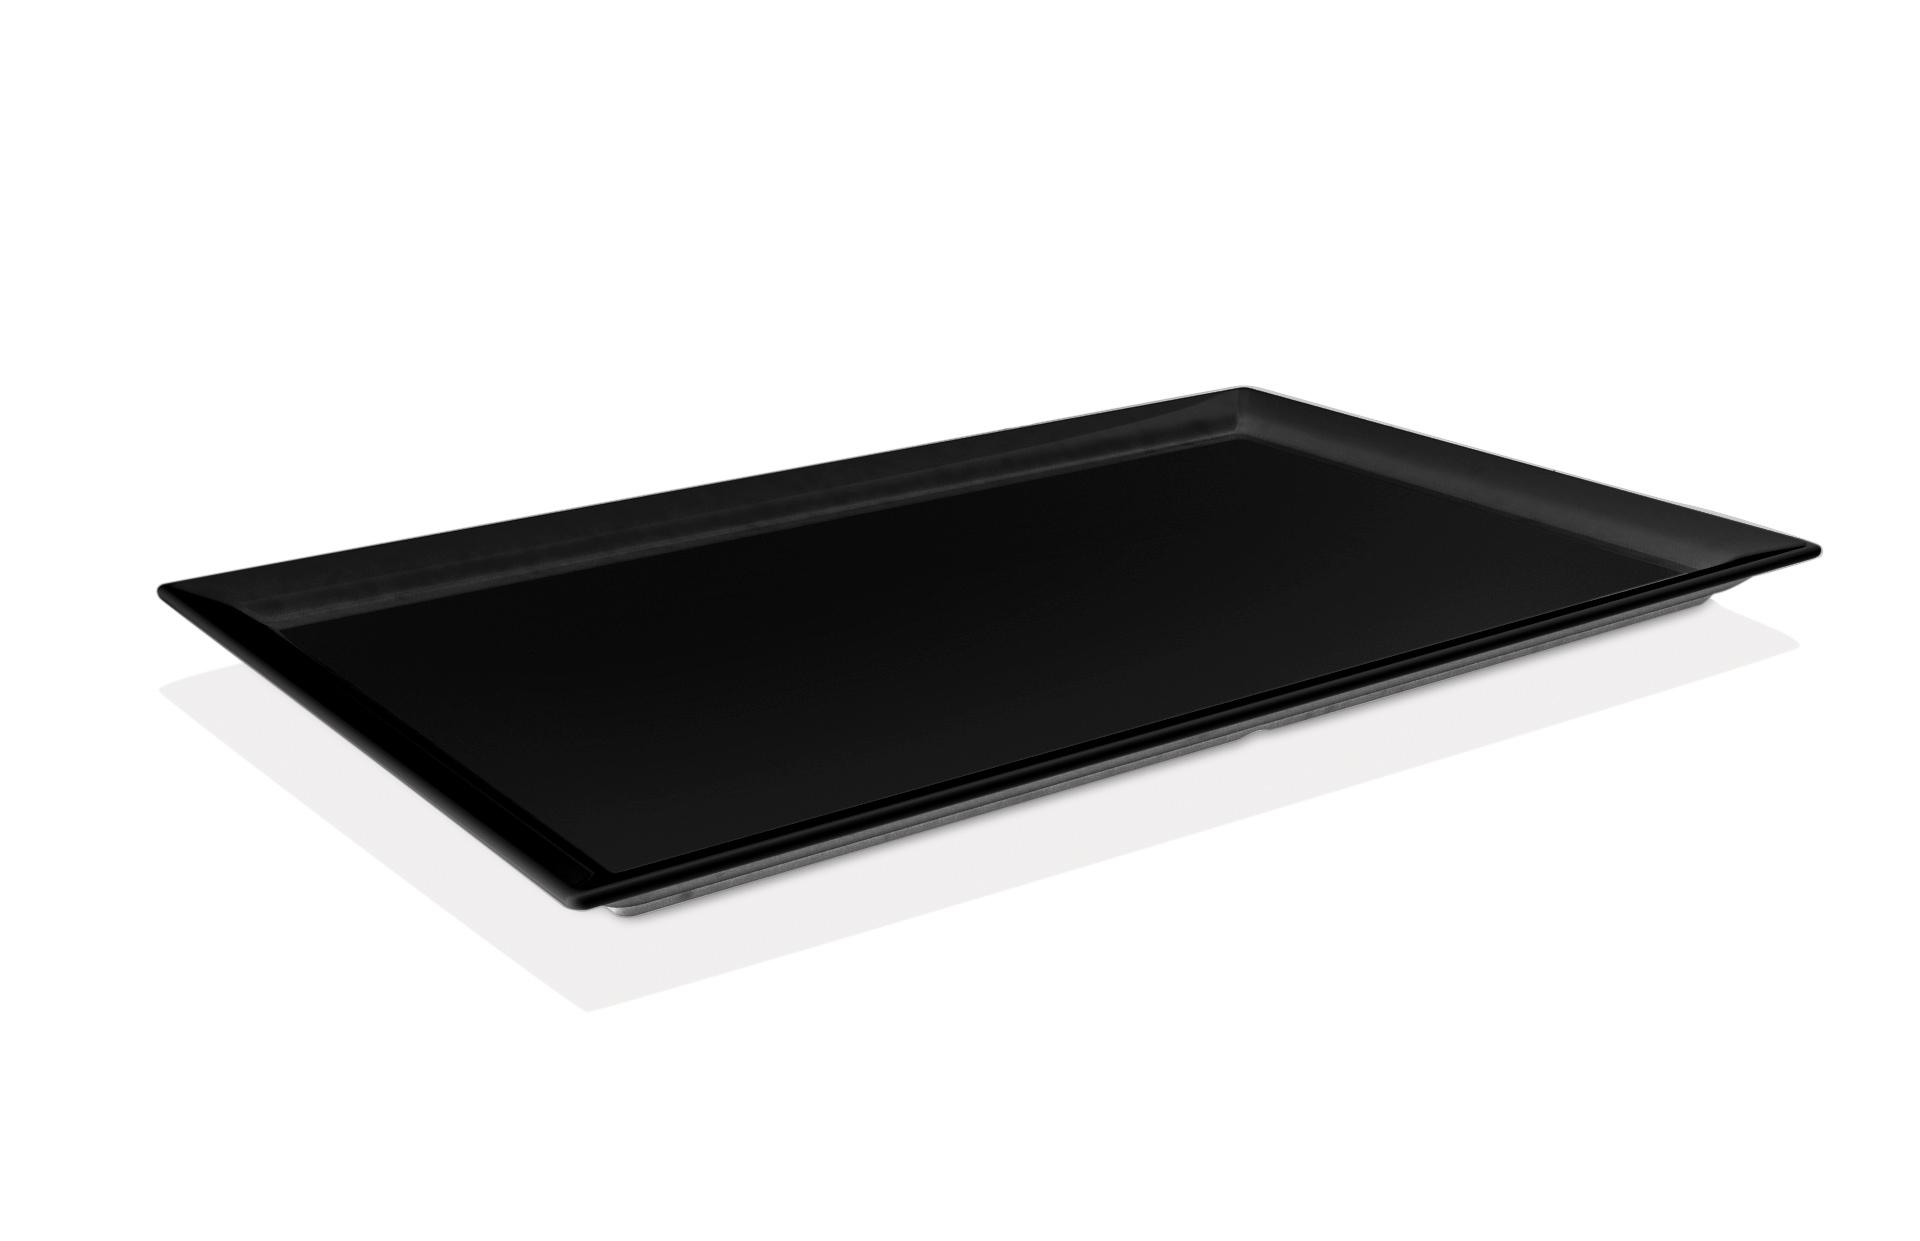 1/4 GN tray made of melamine, black